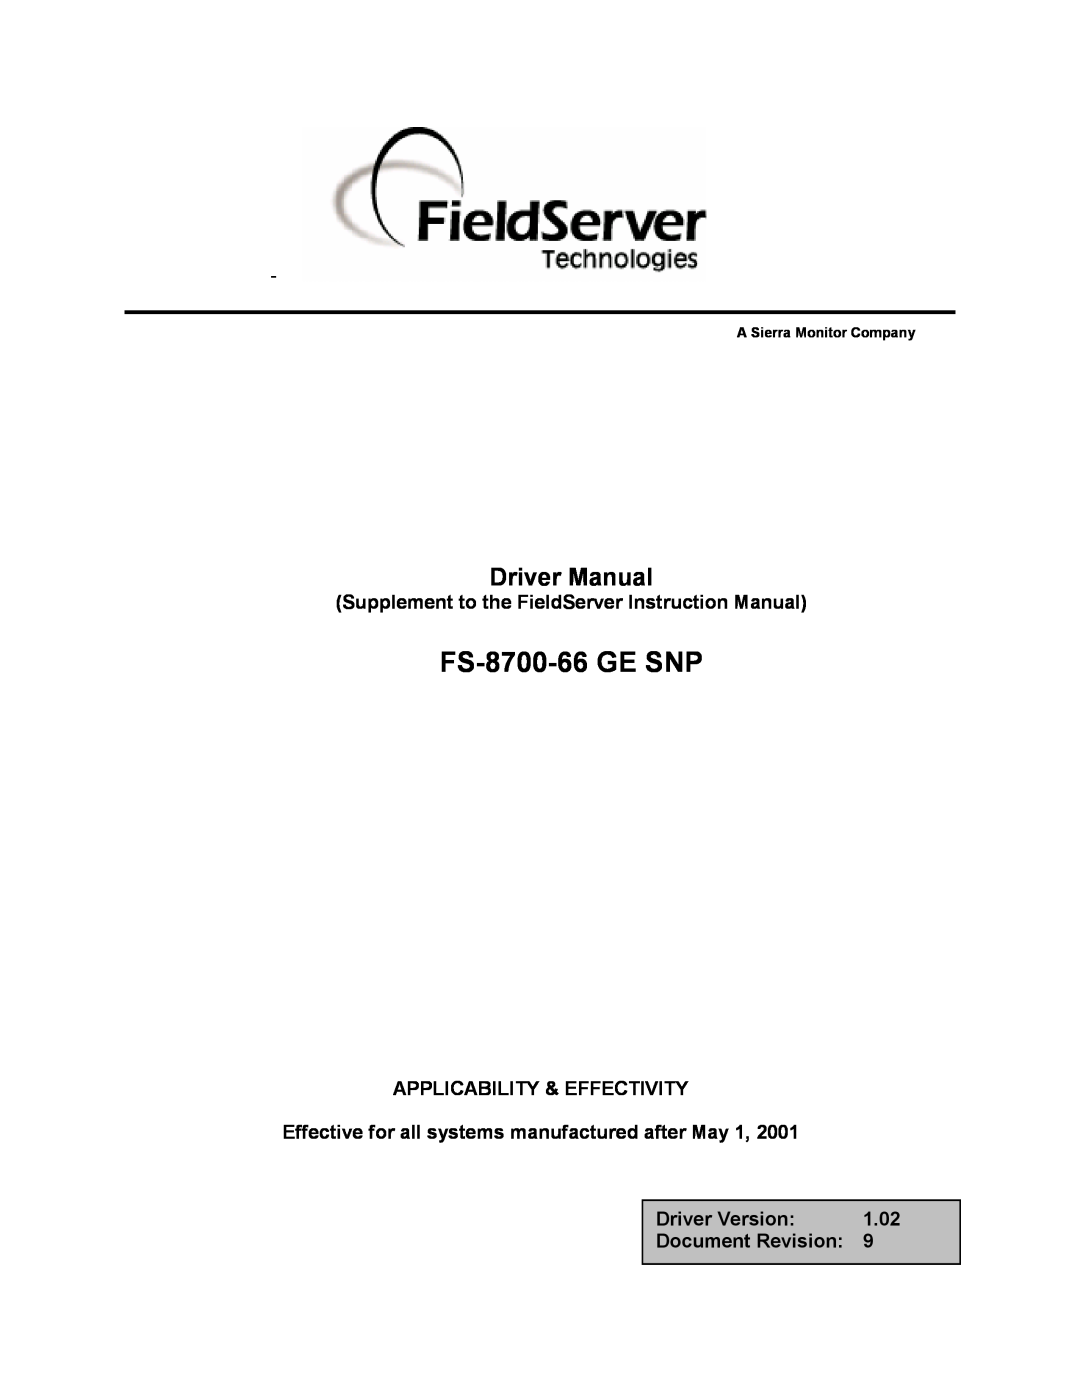 FieldServer instruction manual FS-8700-66 GE SNP, Driver Manual 